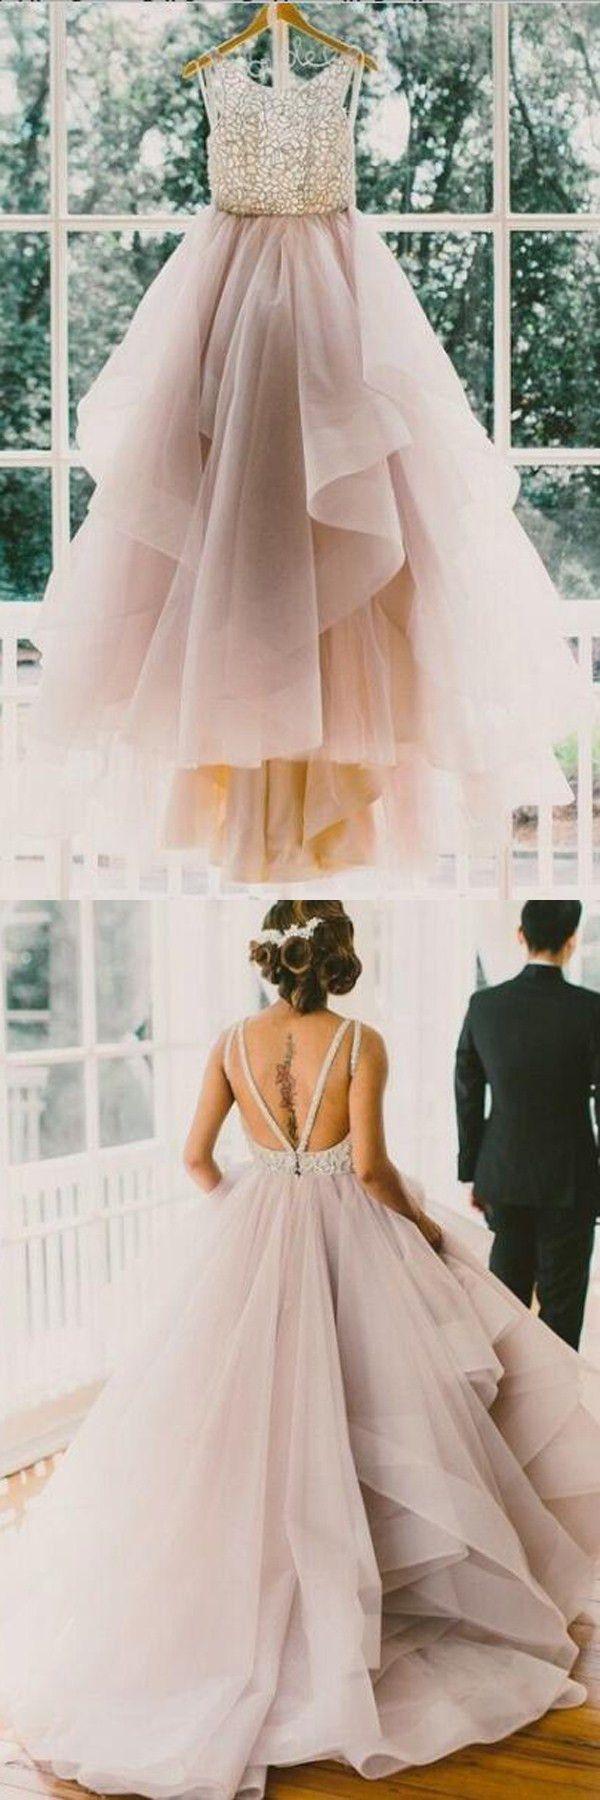 زفاف - The Perfect Fairytale Dress